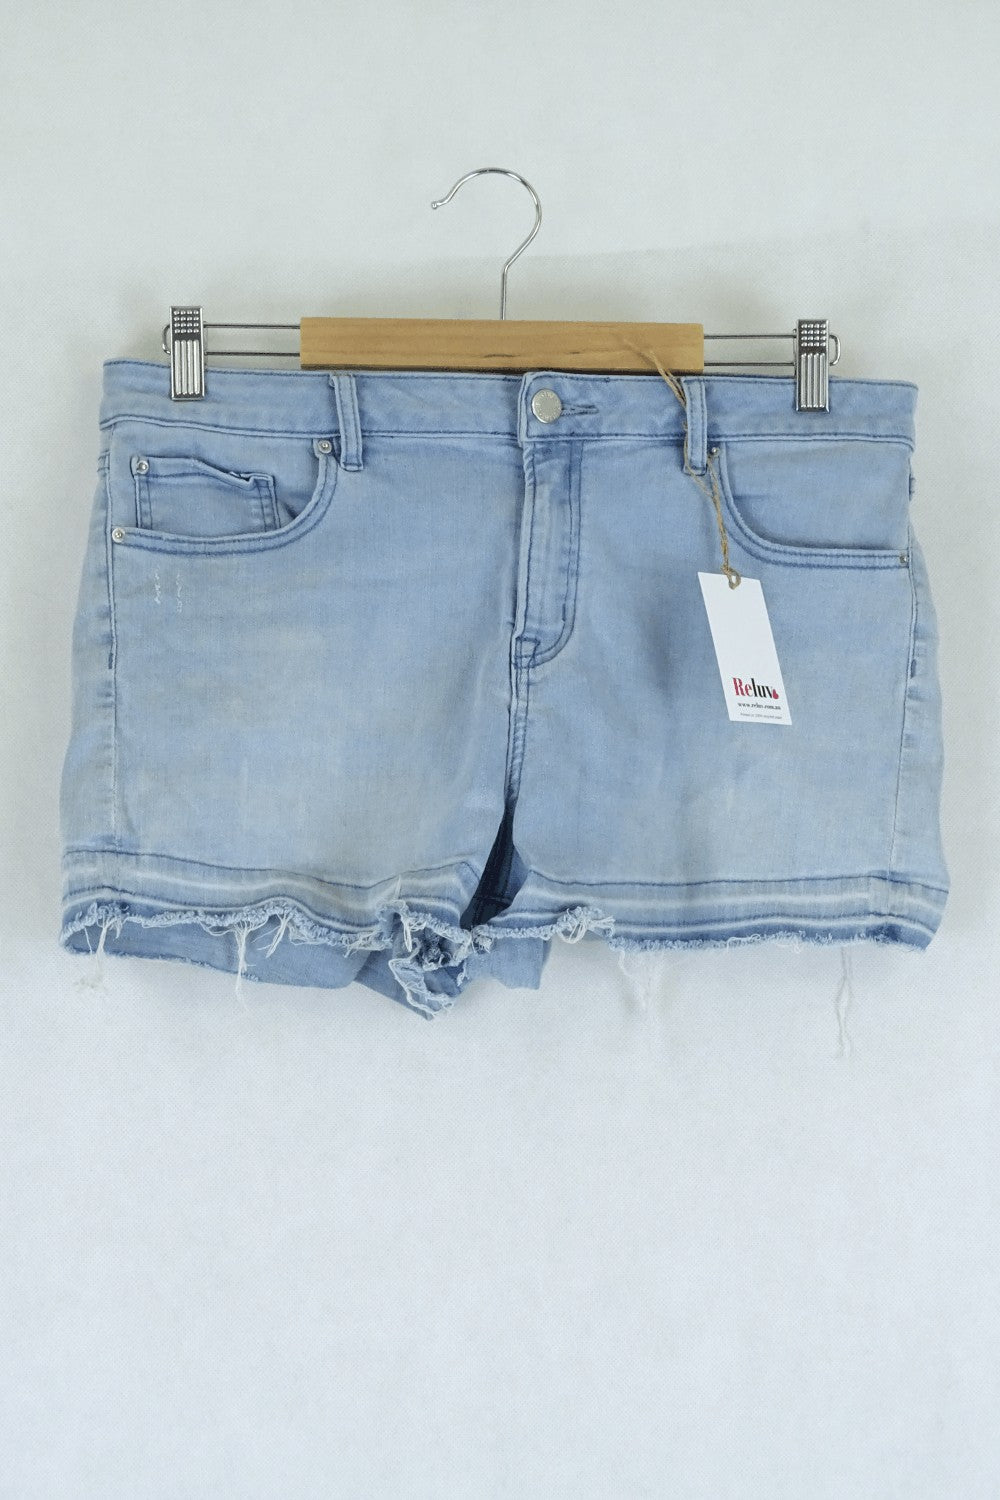 Jeanswest Blue Denim Shorts 14